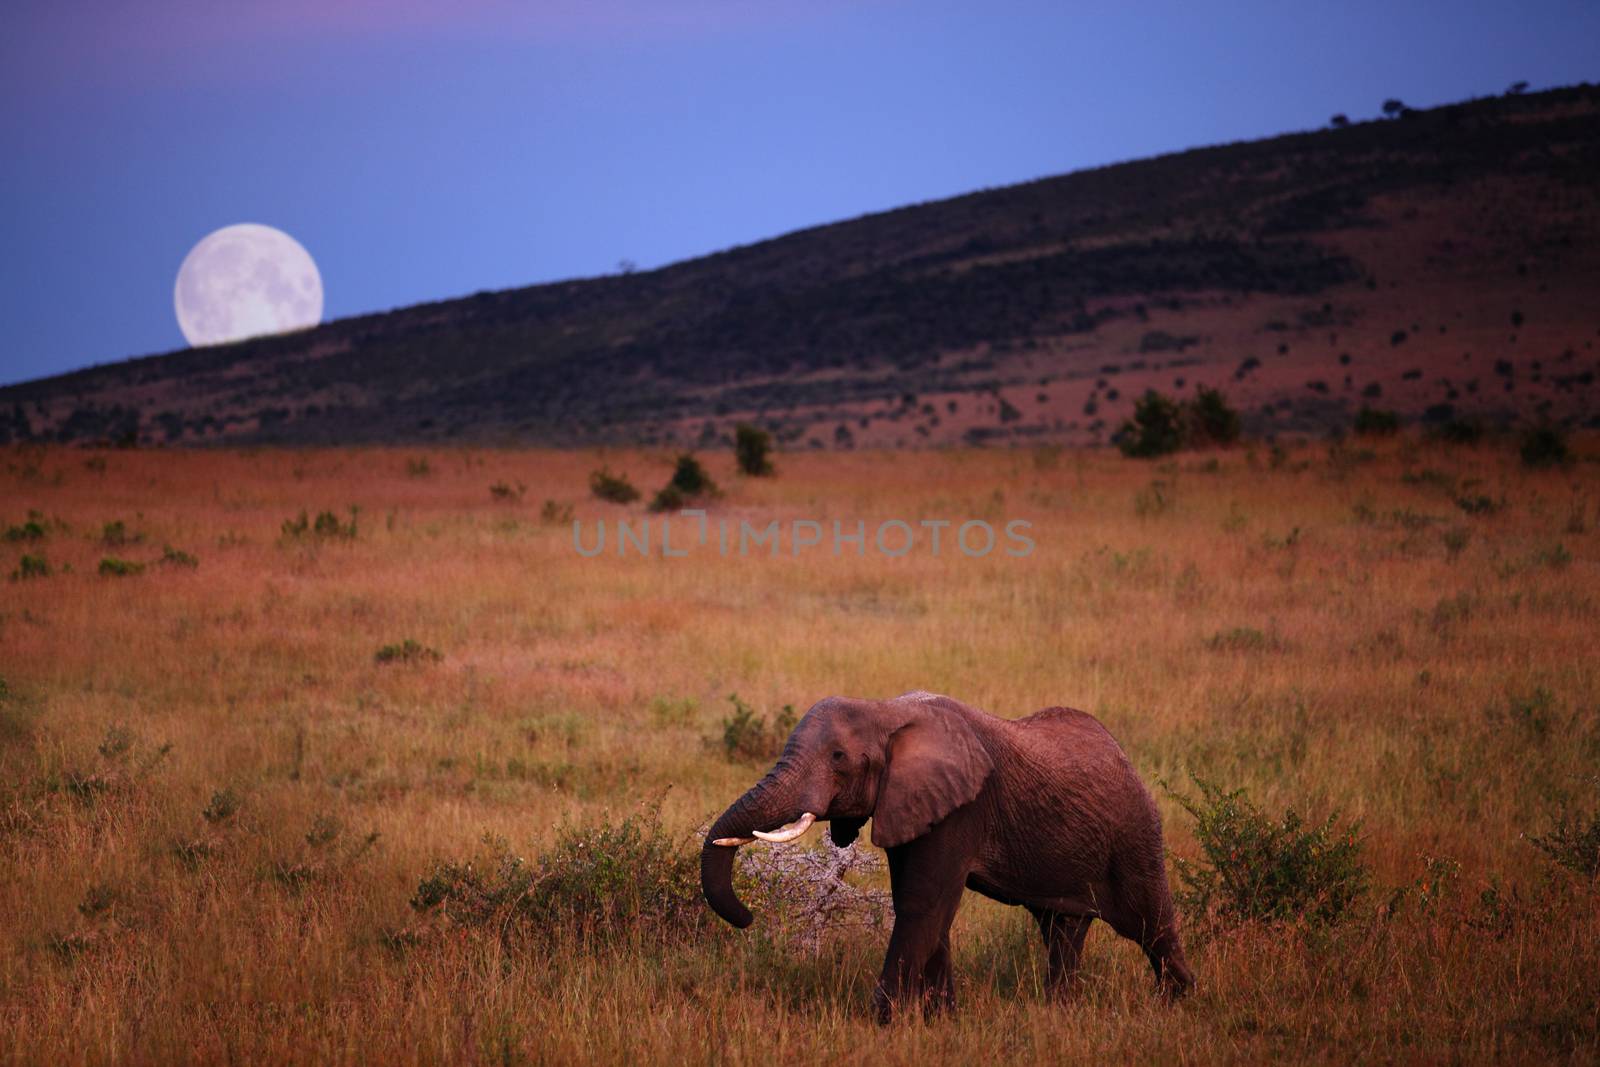 Elephant in the wilderness by ozkanzozmen